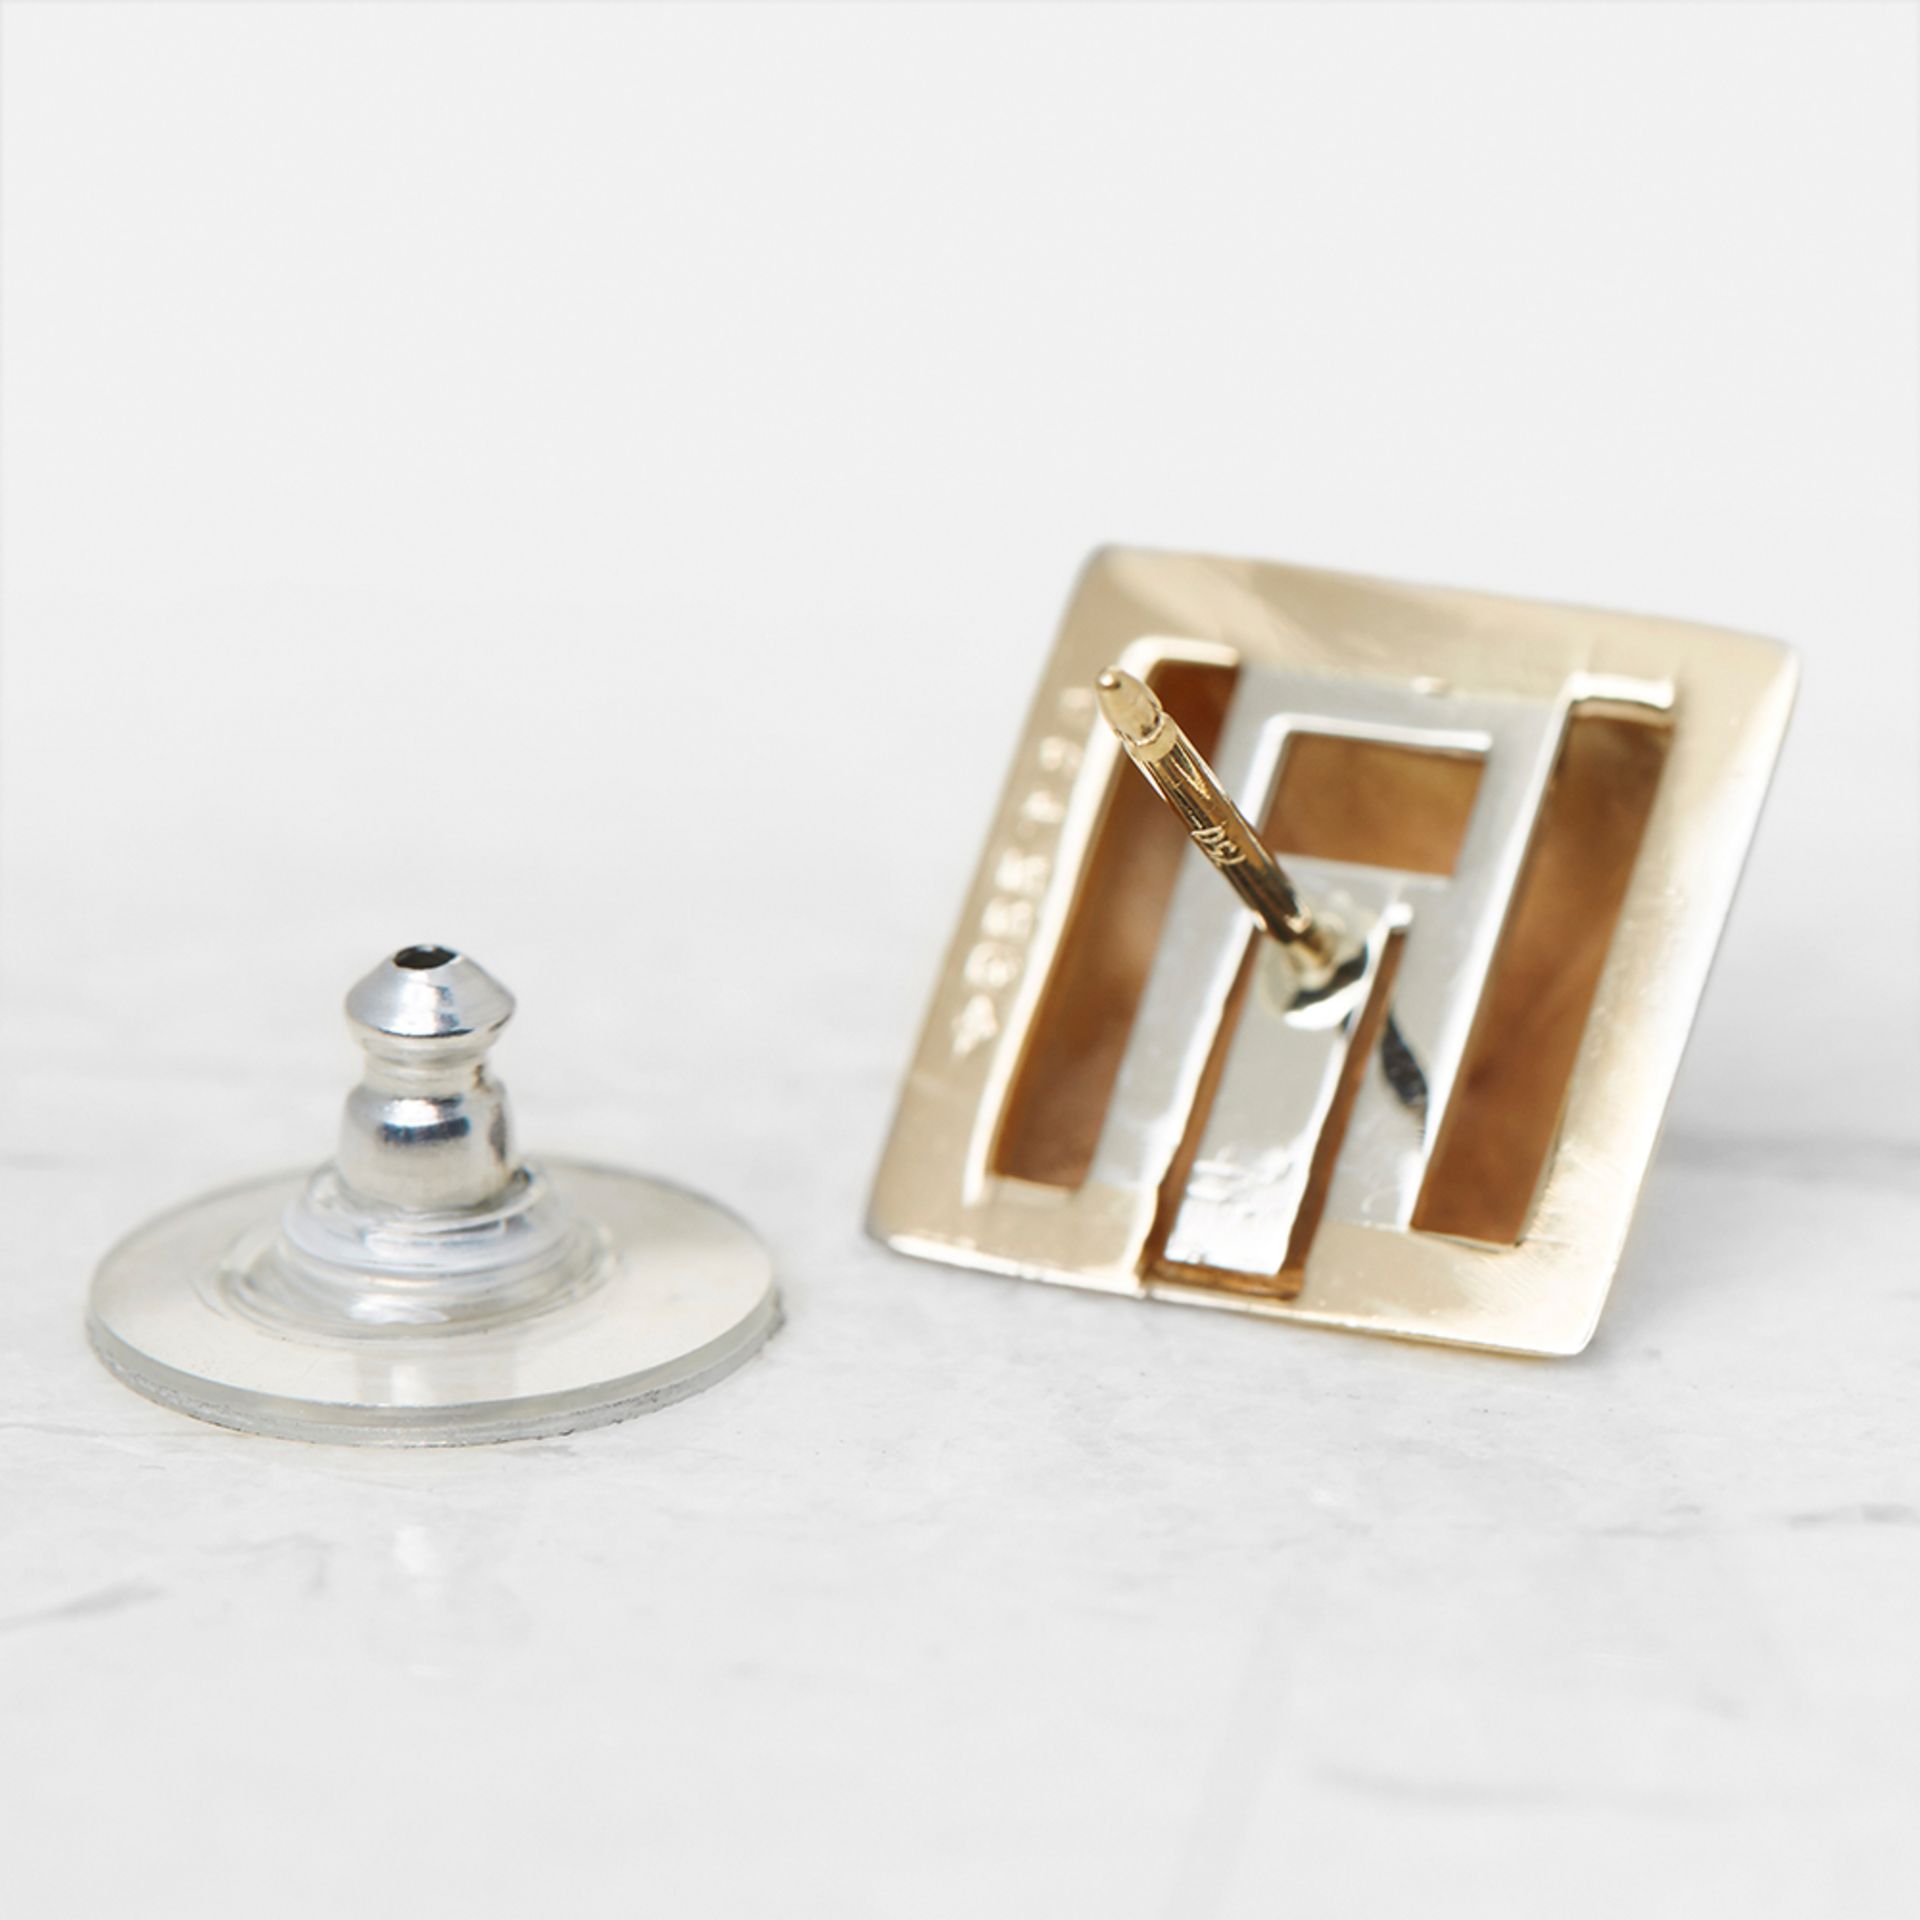 Van Cleef & Arpels 18k Yellow Gold Pyramid Style Earrings - Image 6 of 7